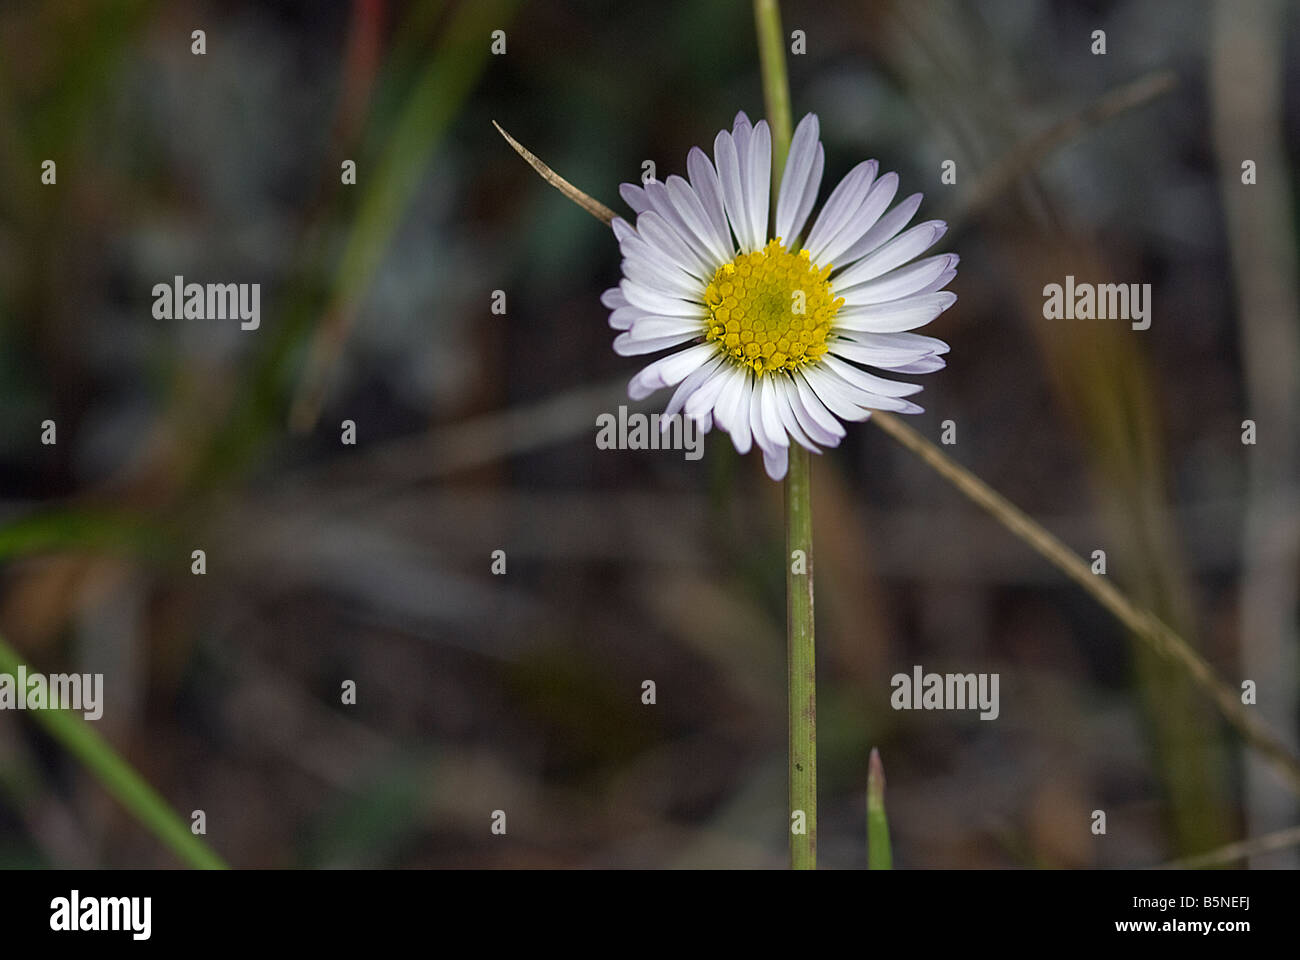 a single trailing daisy pokes its head up late in the season Stock Photo